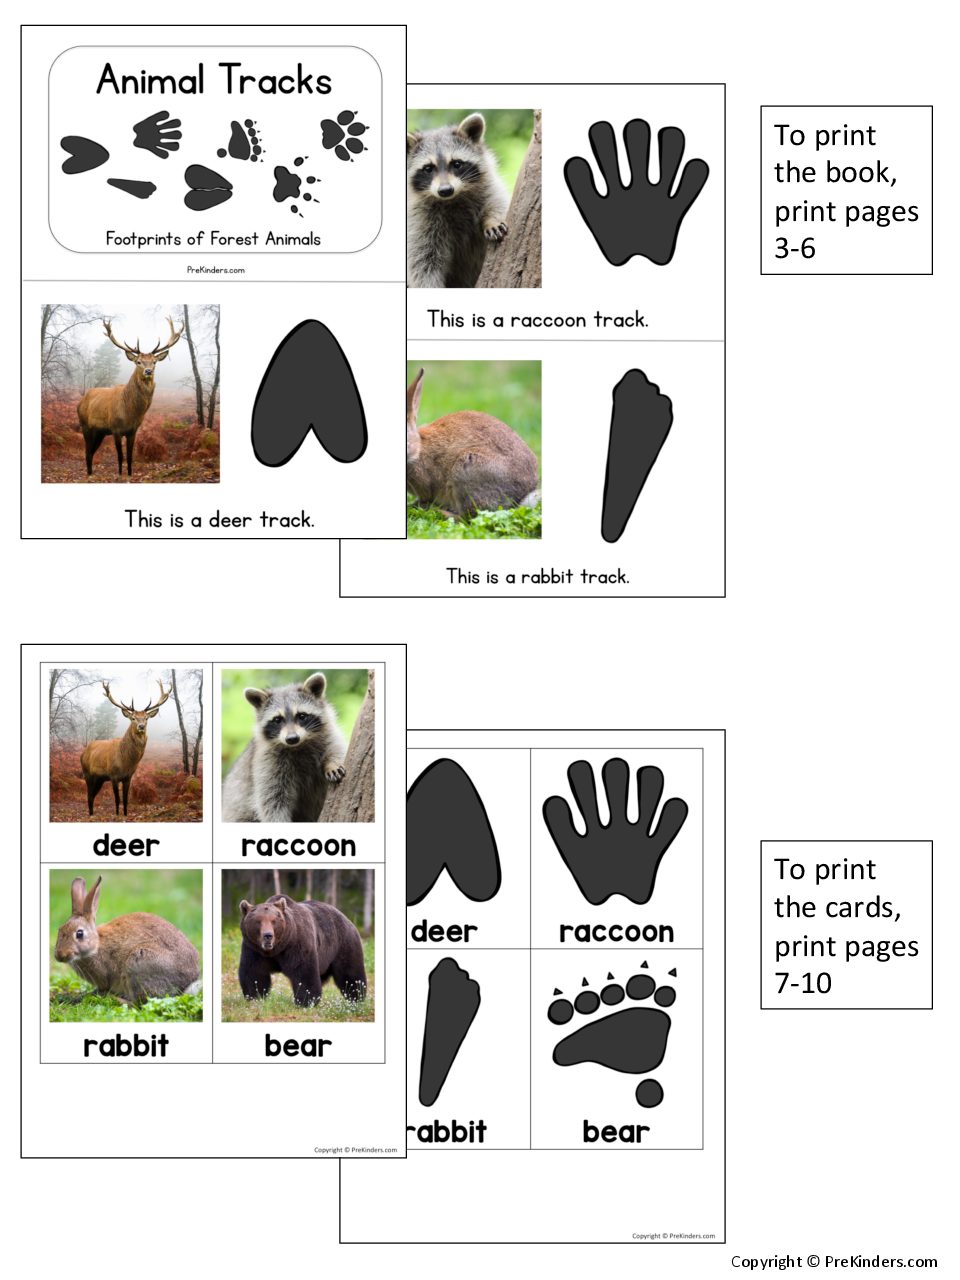 animal-tracks-book-cards-full-color-printable-prekinders